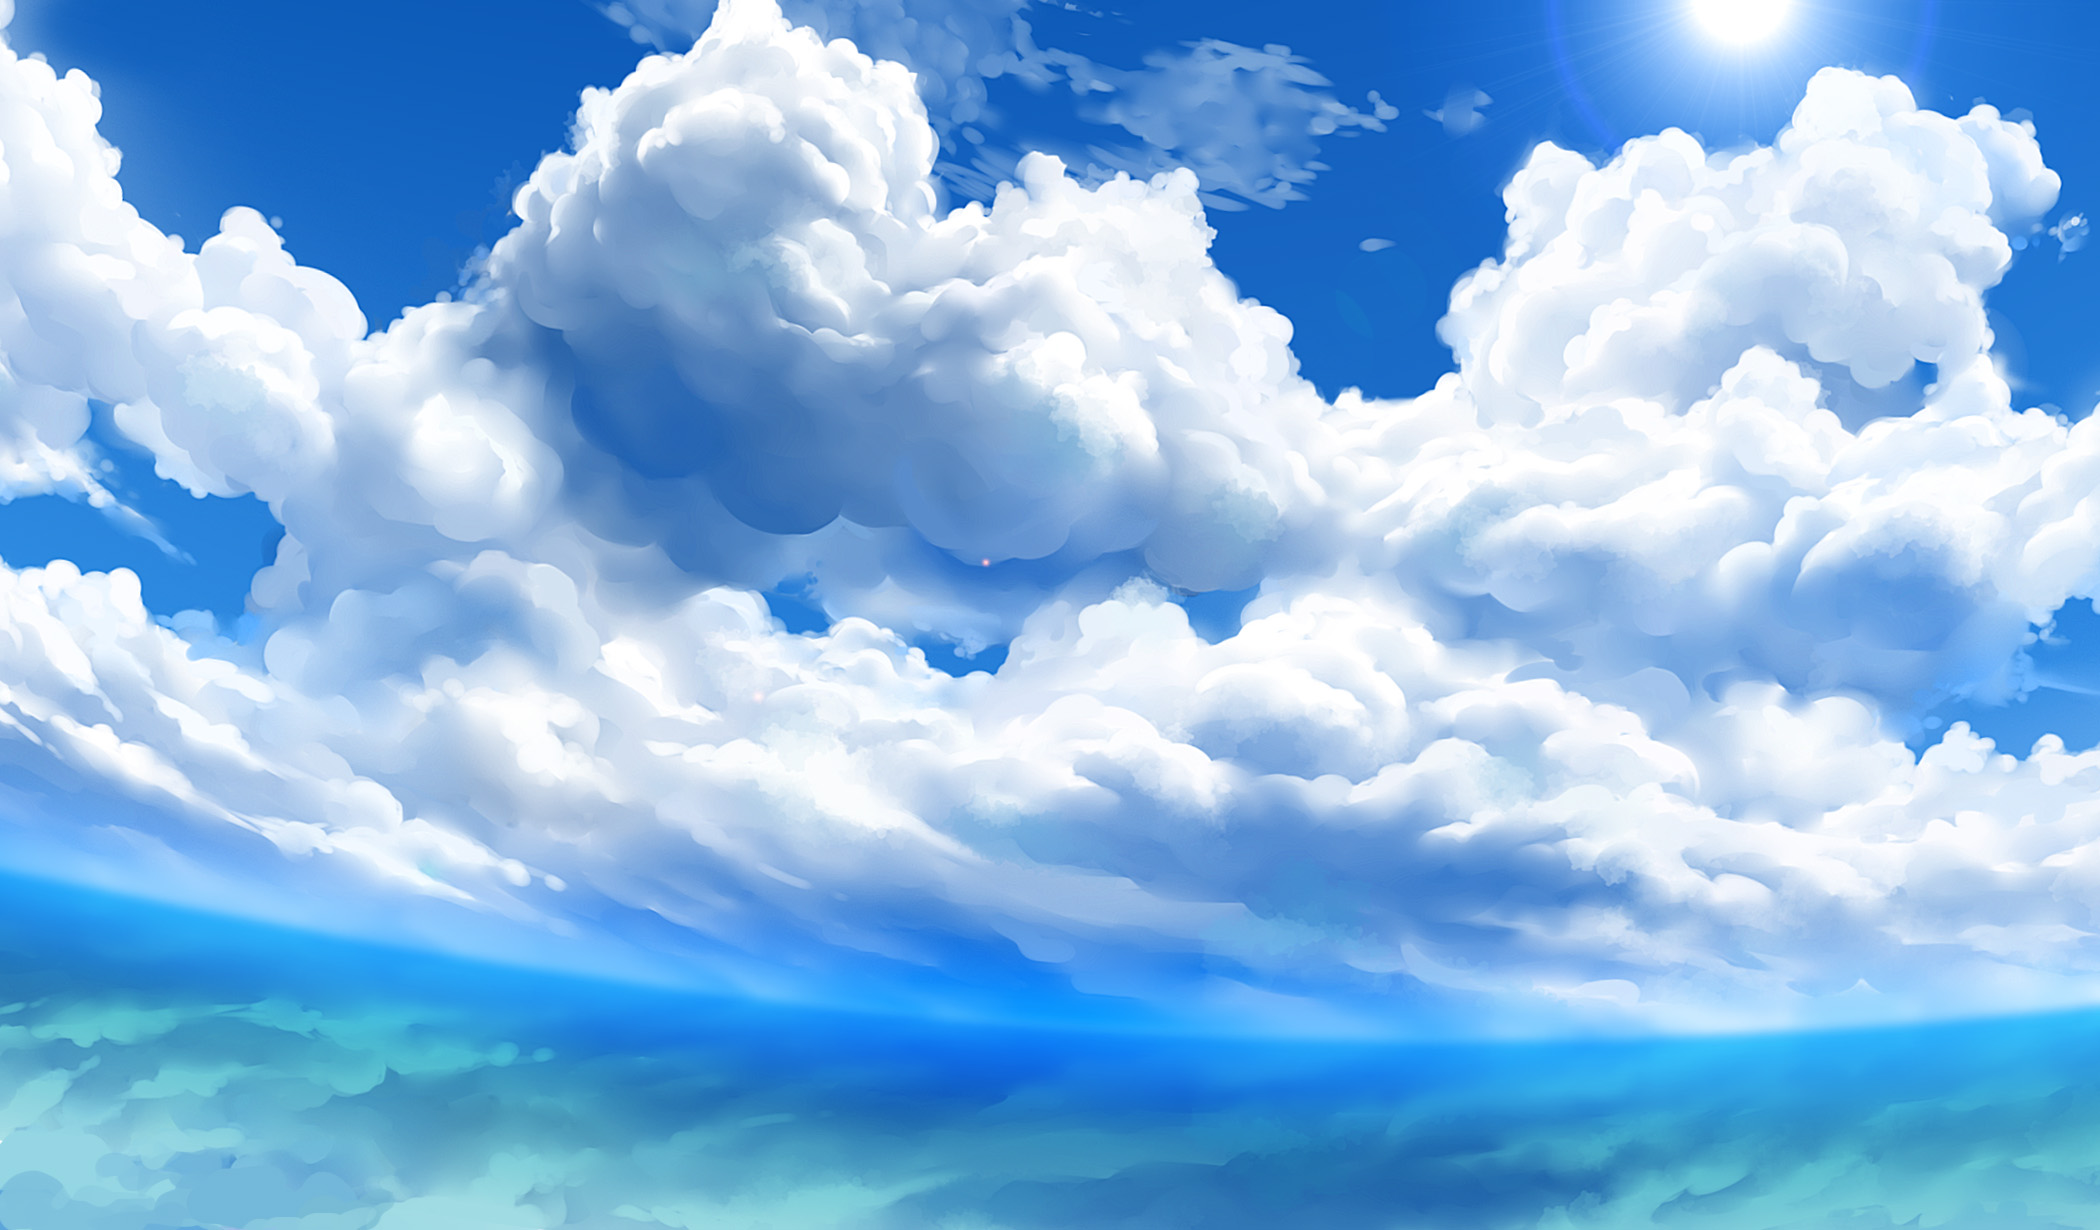 wallpaper for desktop, laptop | bd76-anime-sky-cloud -spring-art-illustration-blue